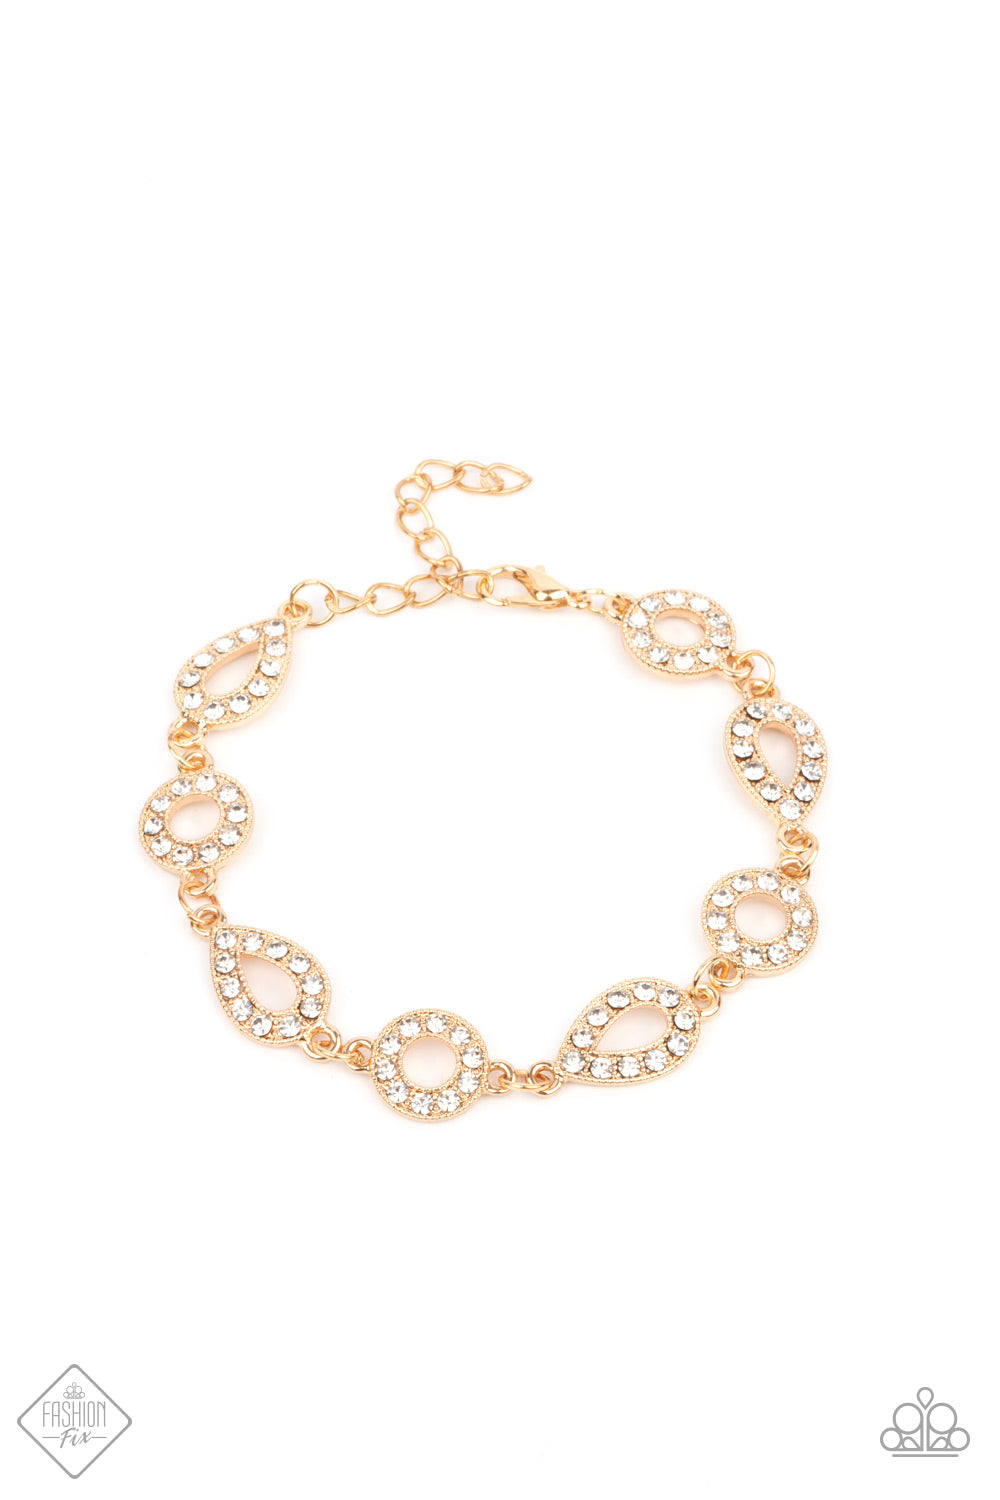 Paparazzi Royally Refined Gold Clasp Bracelet - Fashion Fix Fiercely 5th Avenue April 2021